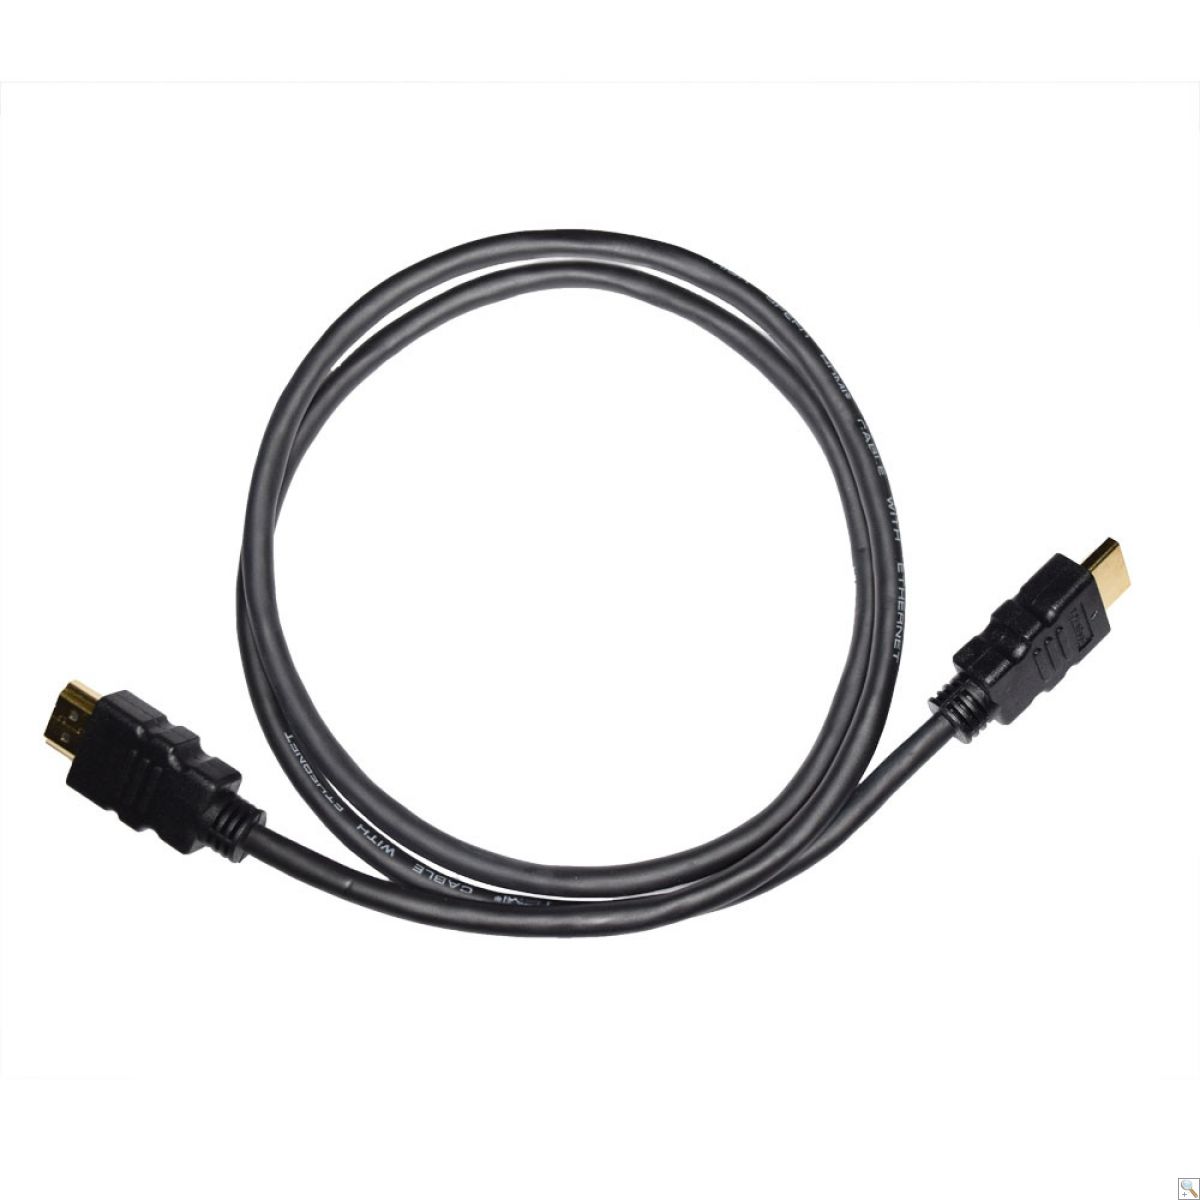 HDMI Cable - 20M